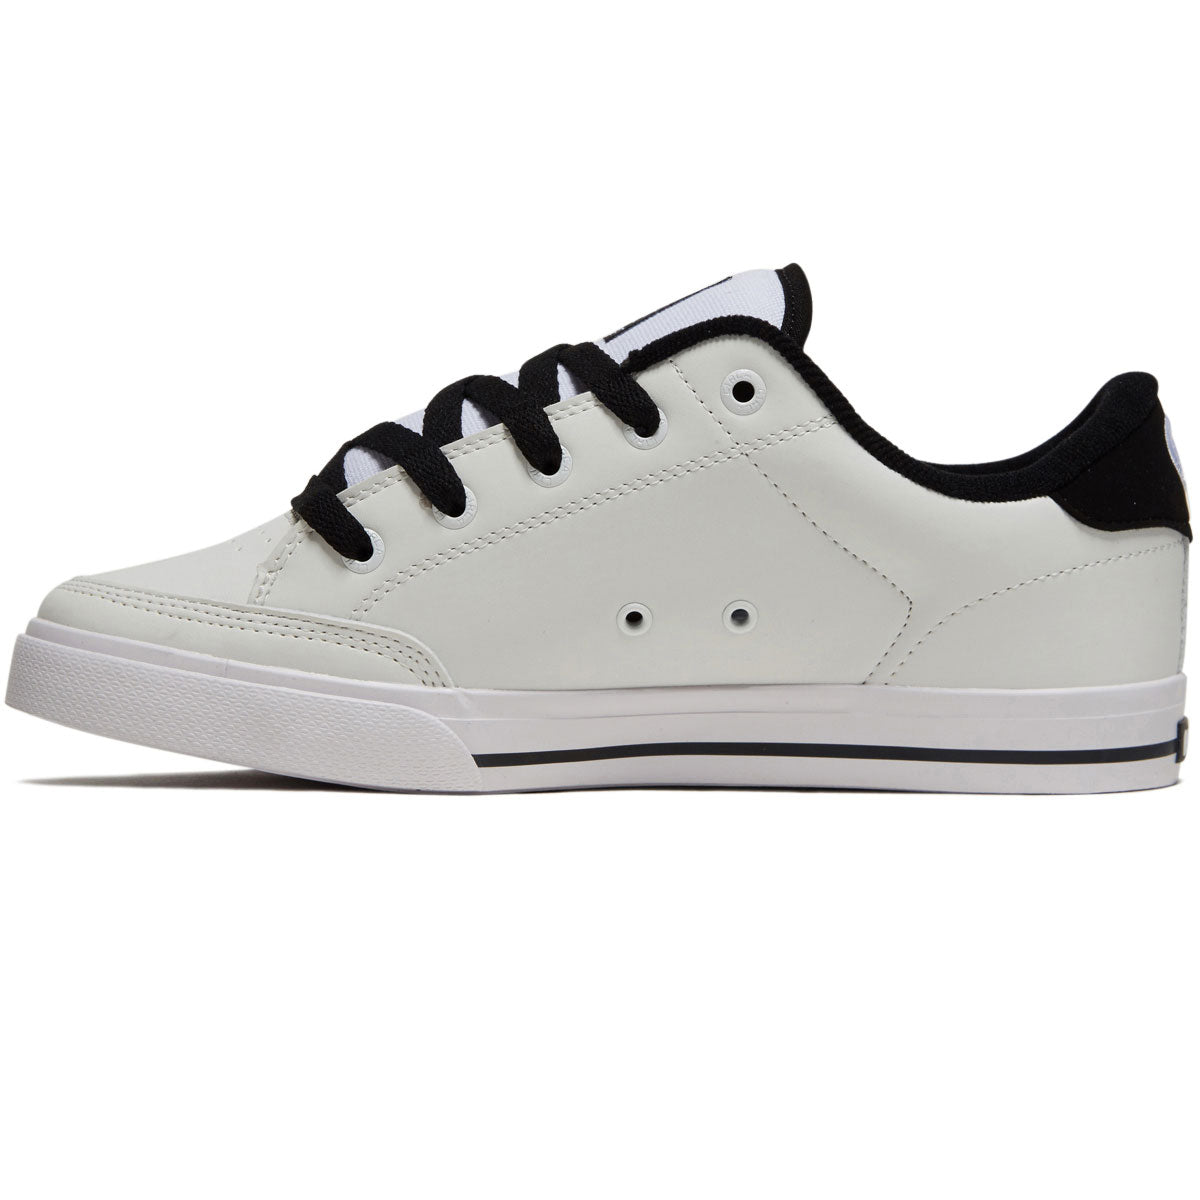 C1rca Buckler Sk Shoes - White/Black image 2